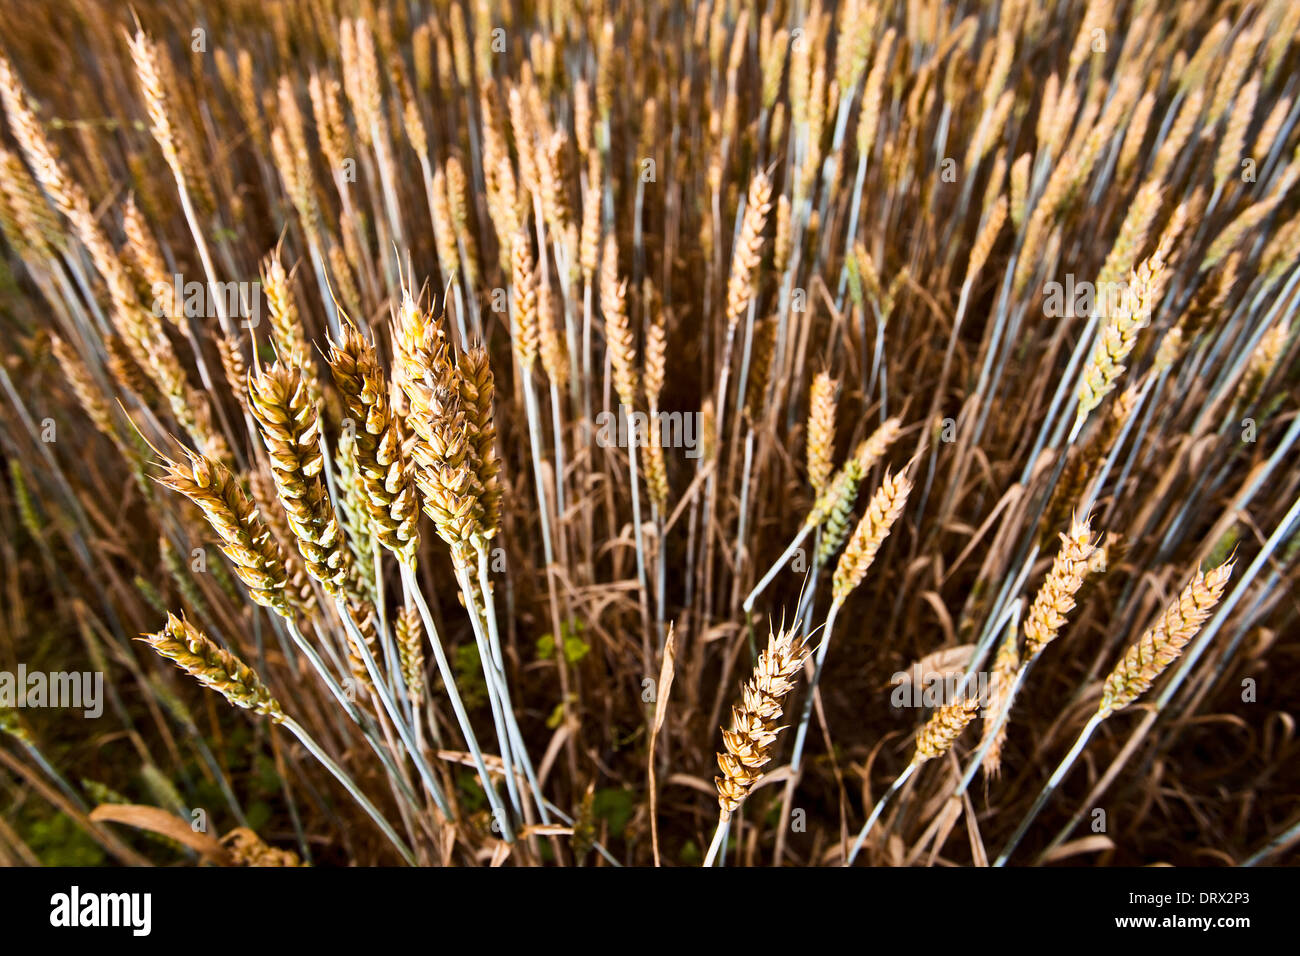 Getreide-Feld in bewölkten Tag, Brennweite 20 mm Stockfoto